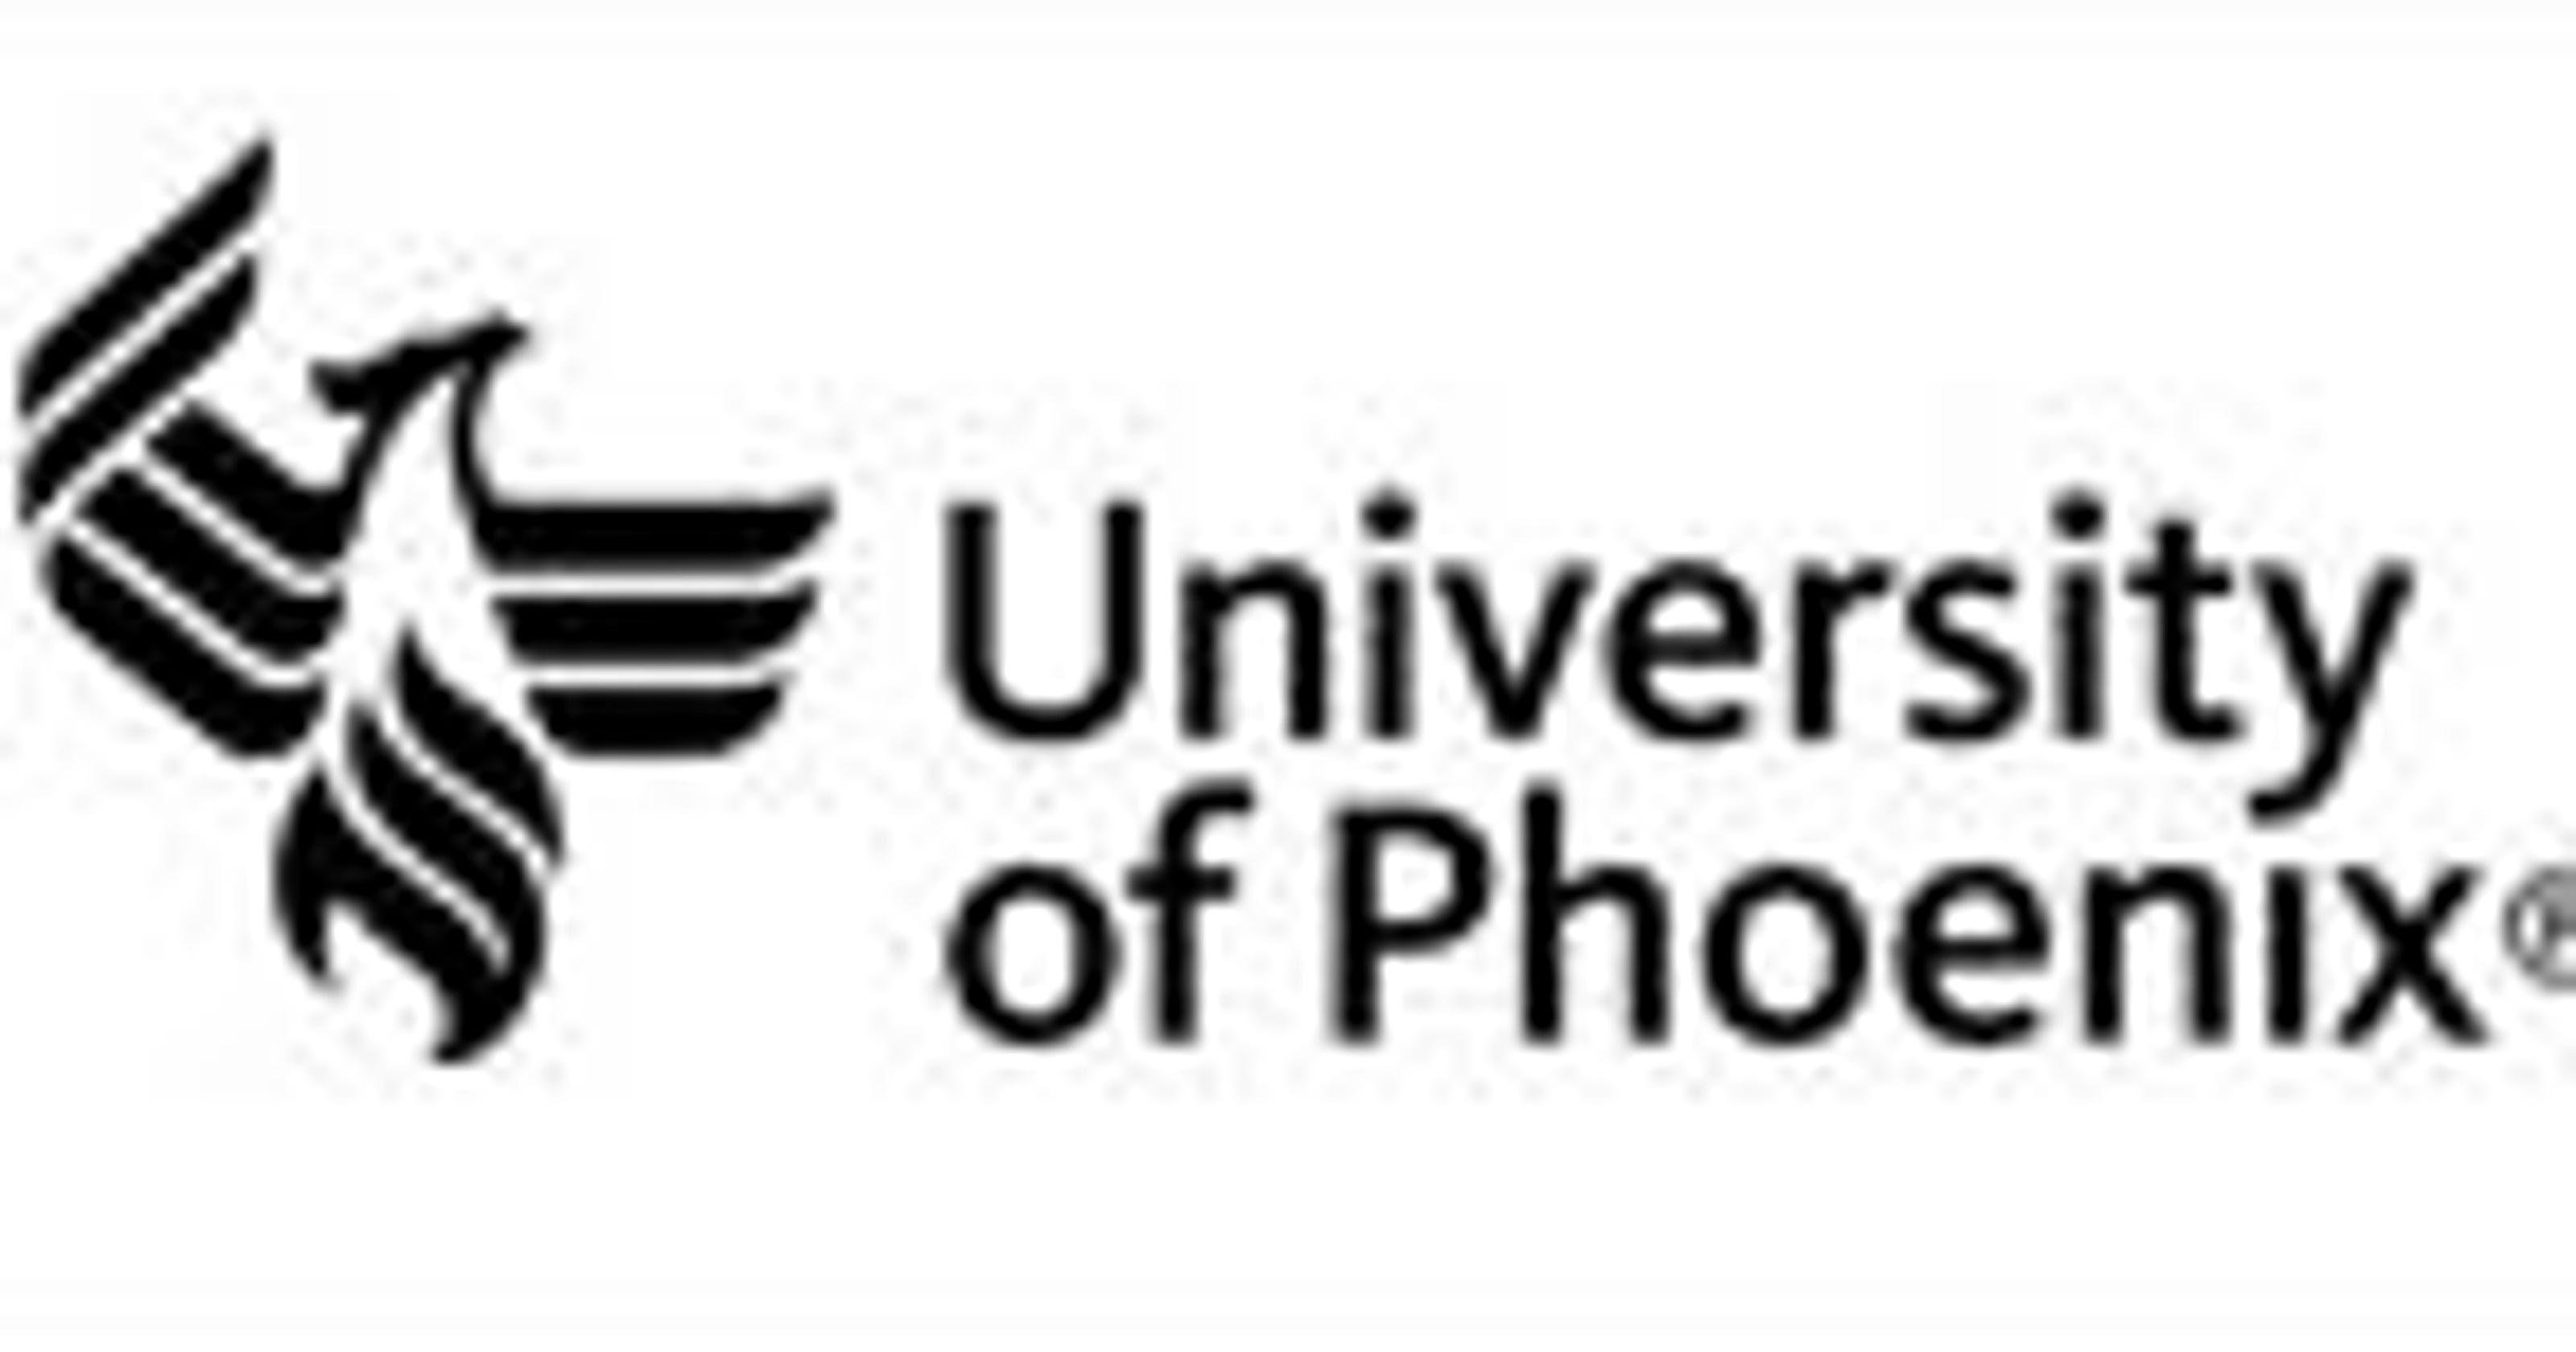 UOPX Logo - University of Phoenix stops new enrollment at TN campuses